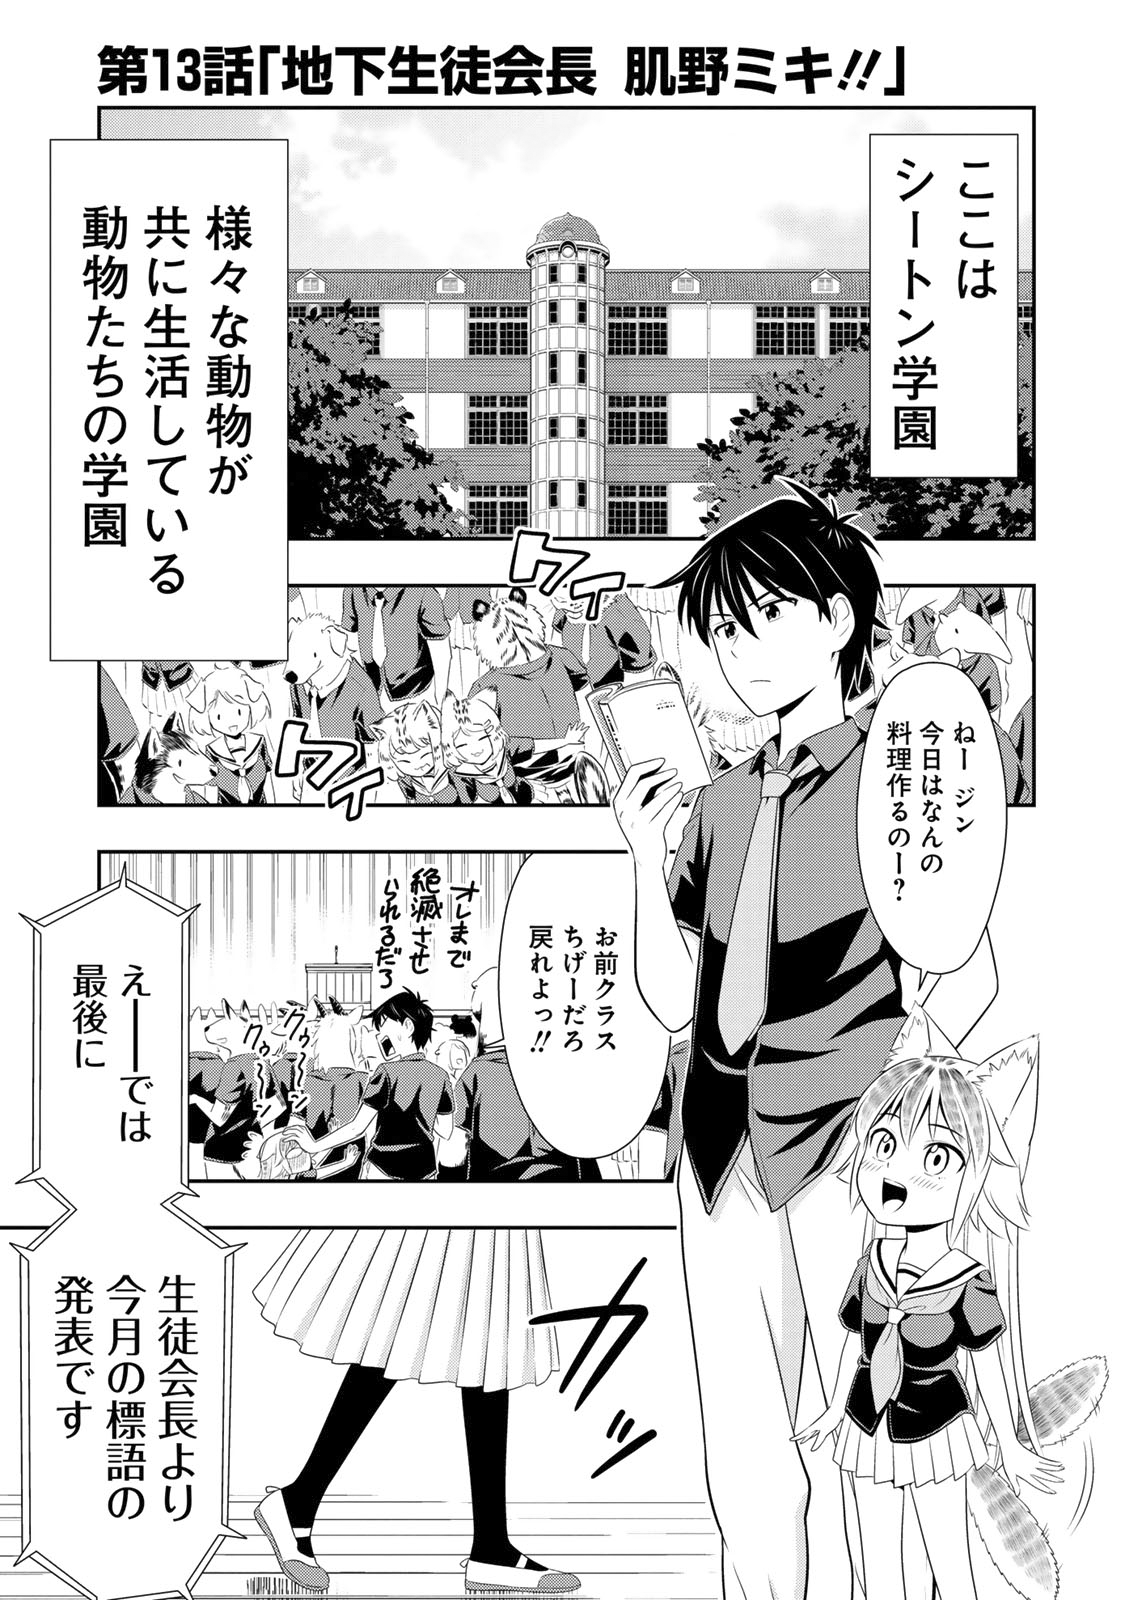 Seton Academy Manga